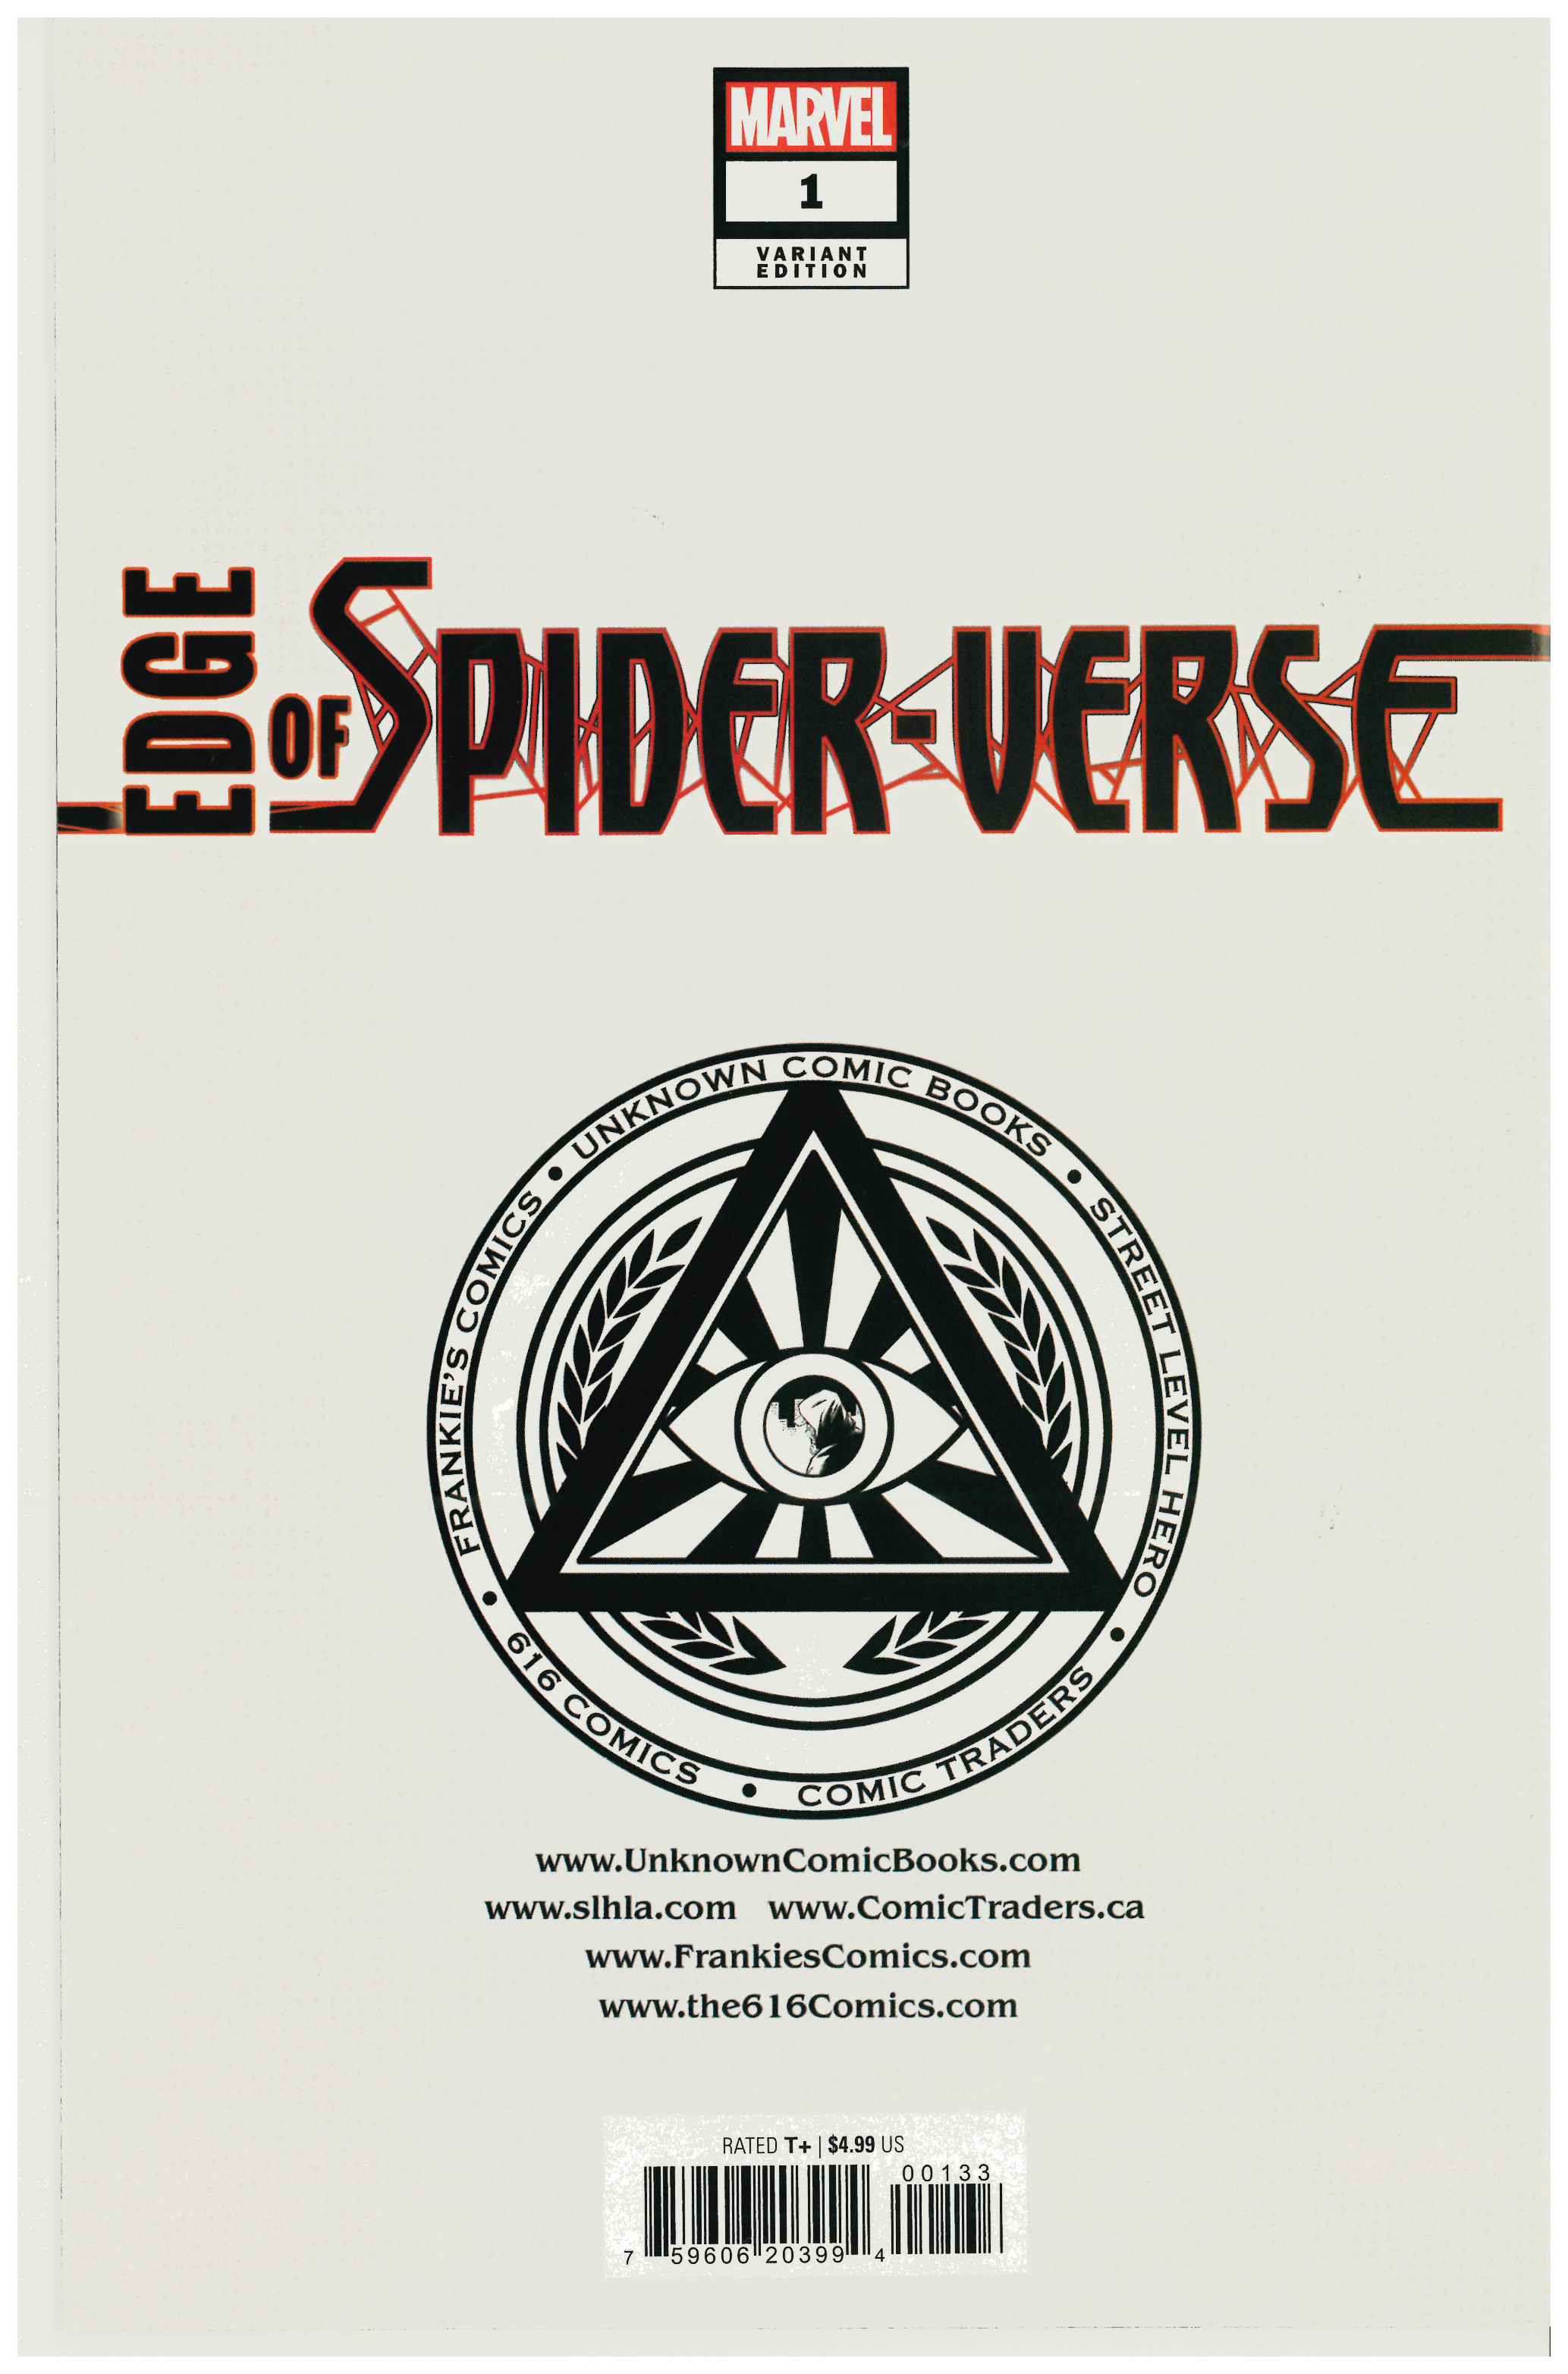 Edge of Spider-Verse #1 backside